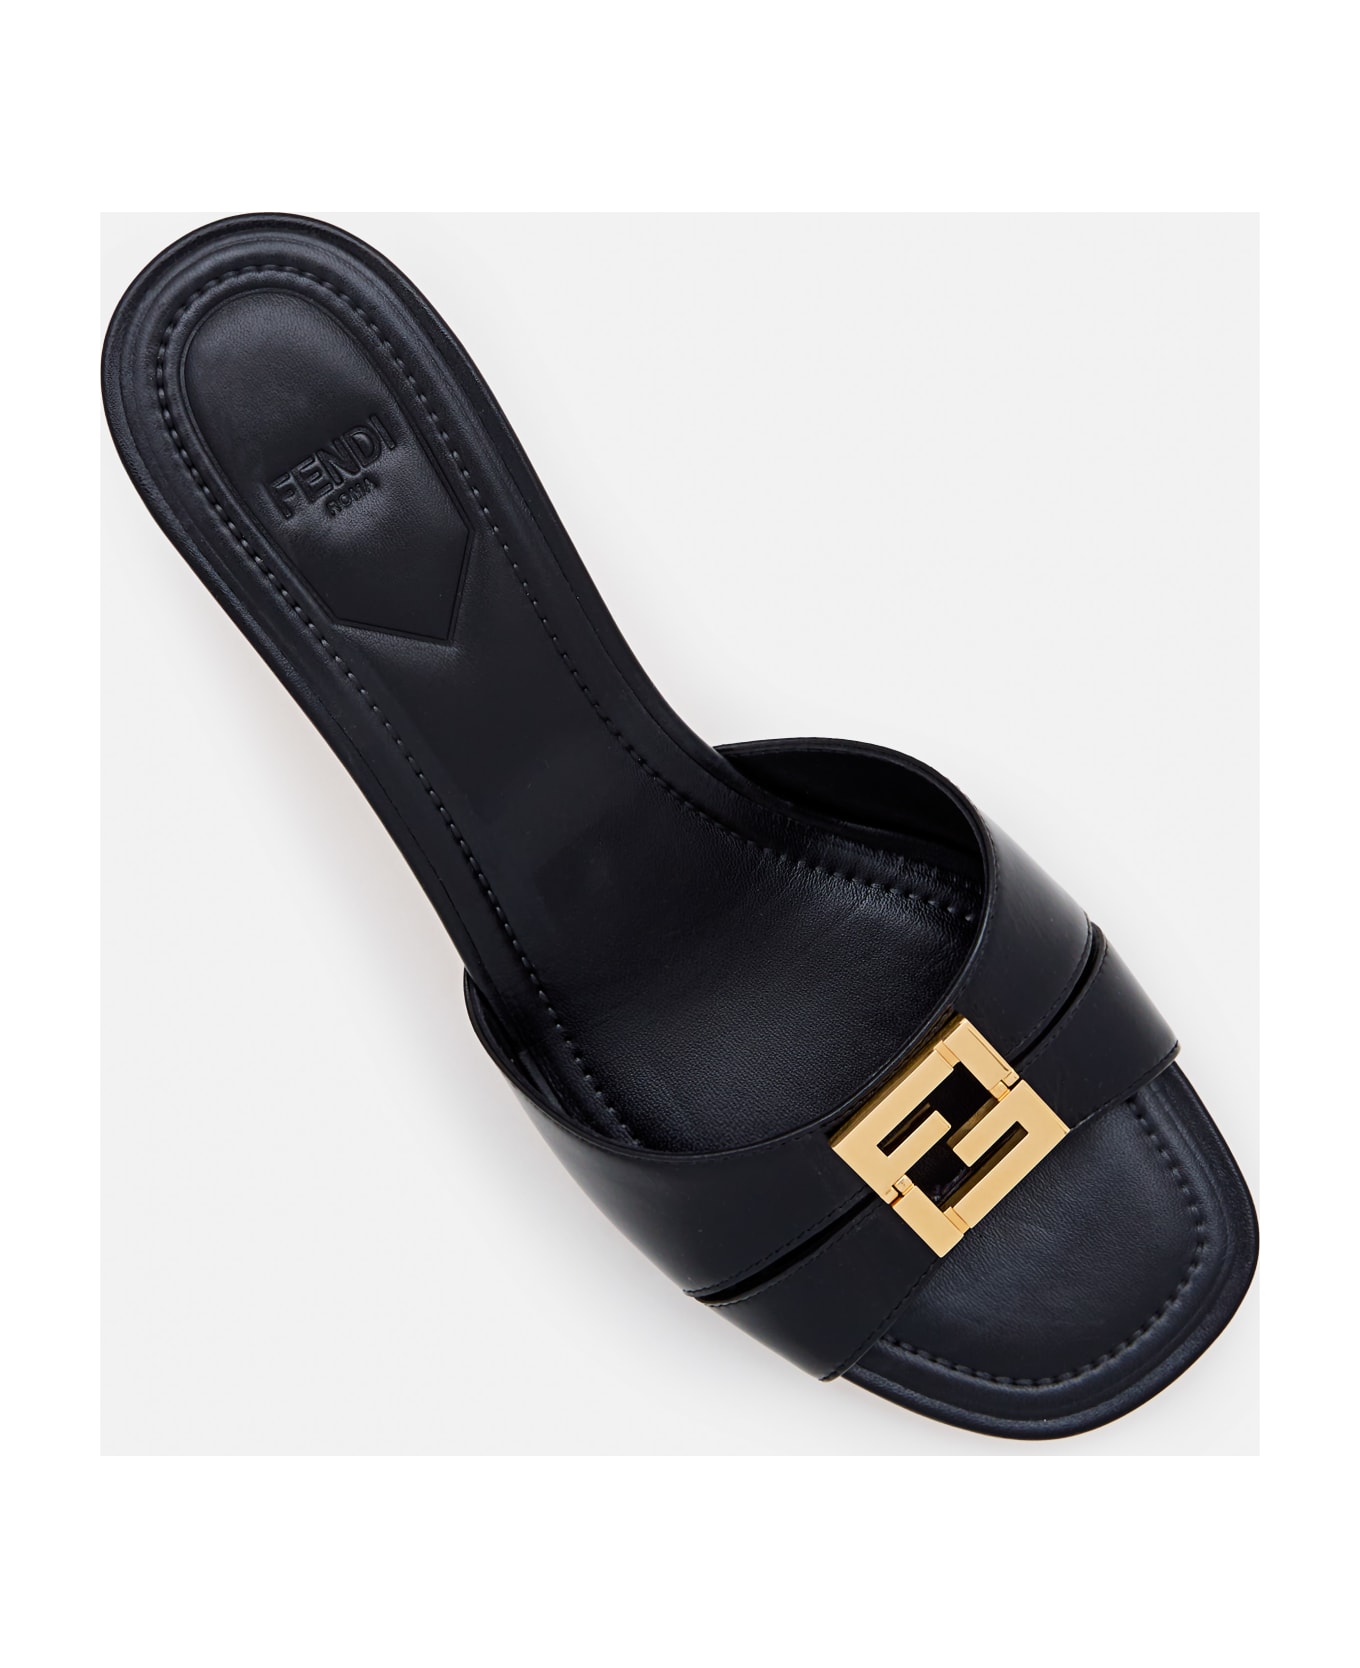 Fendi Slide Patent Leather Heels - Nero